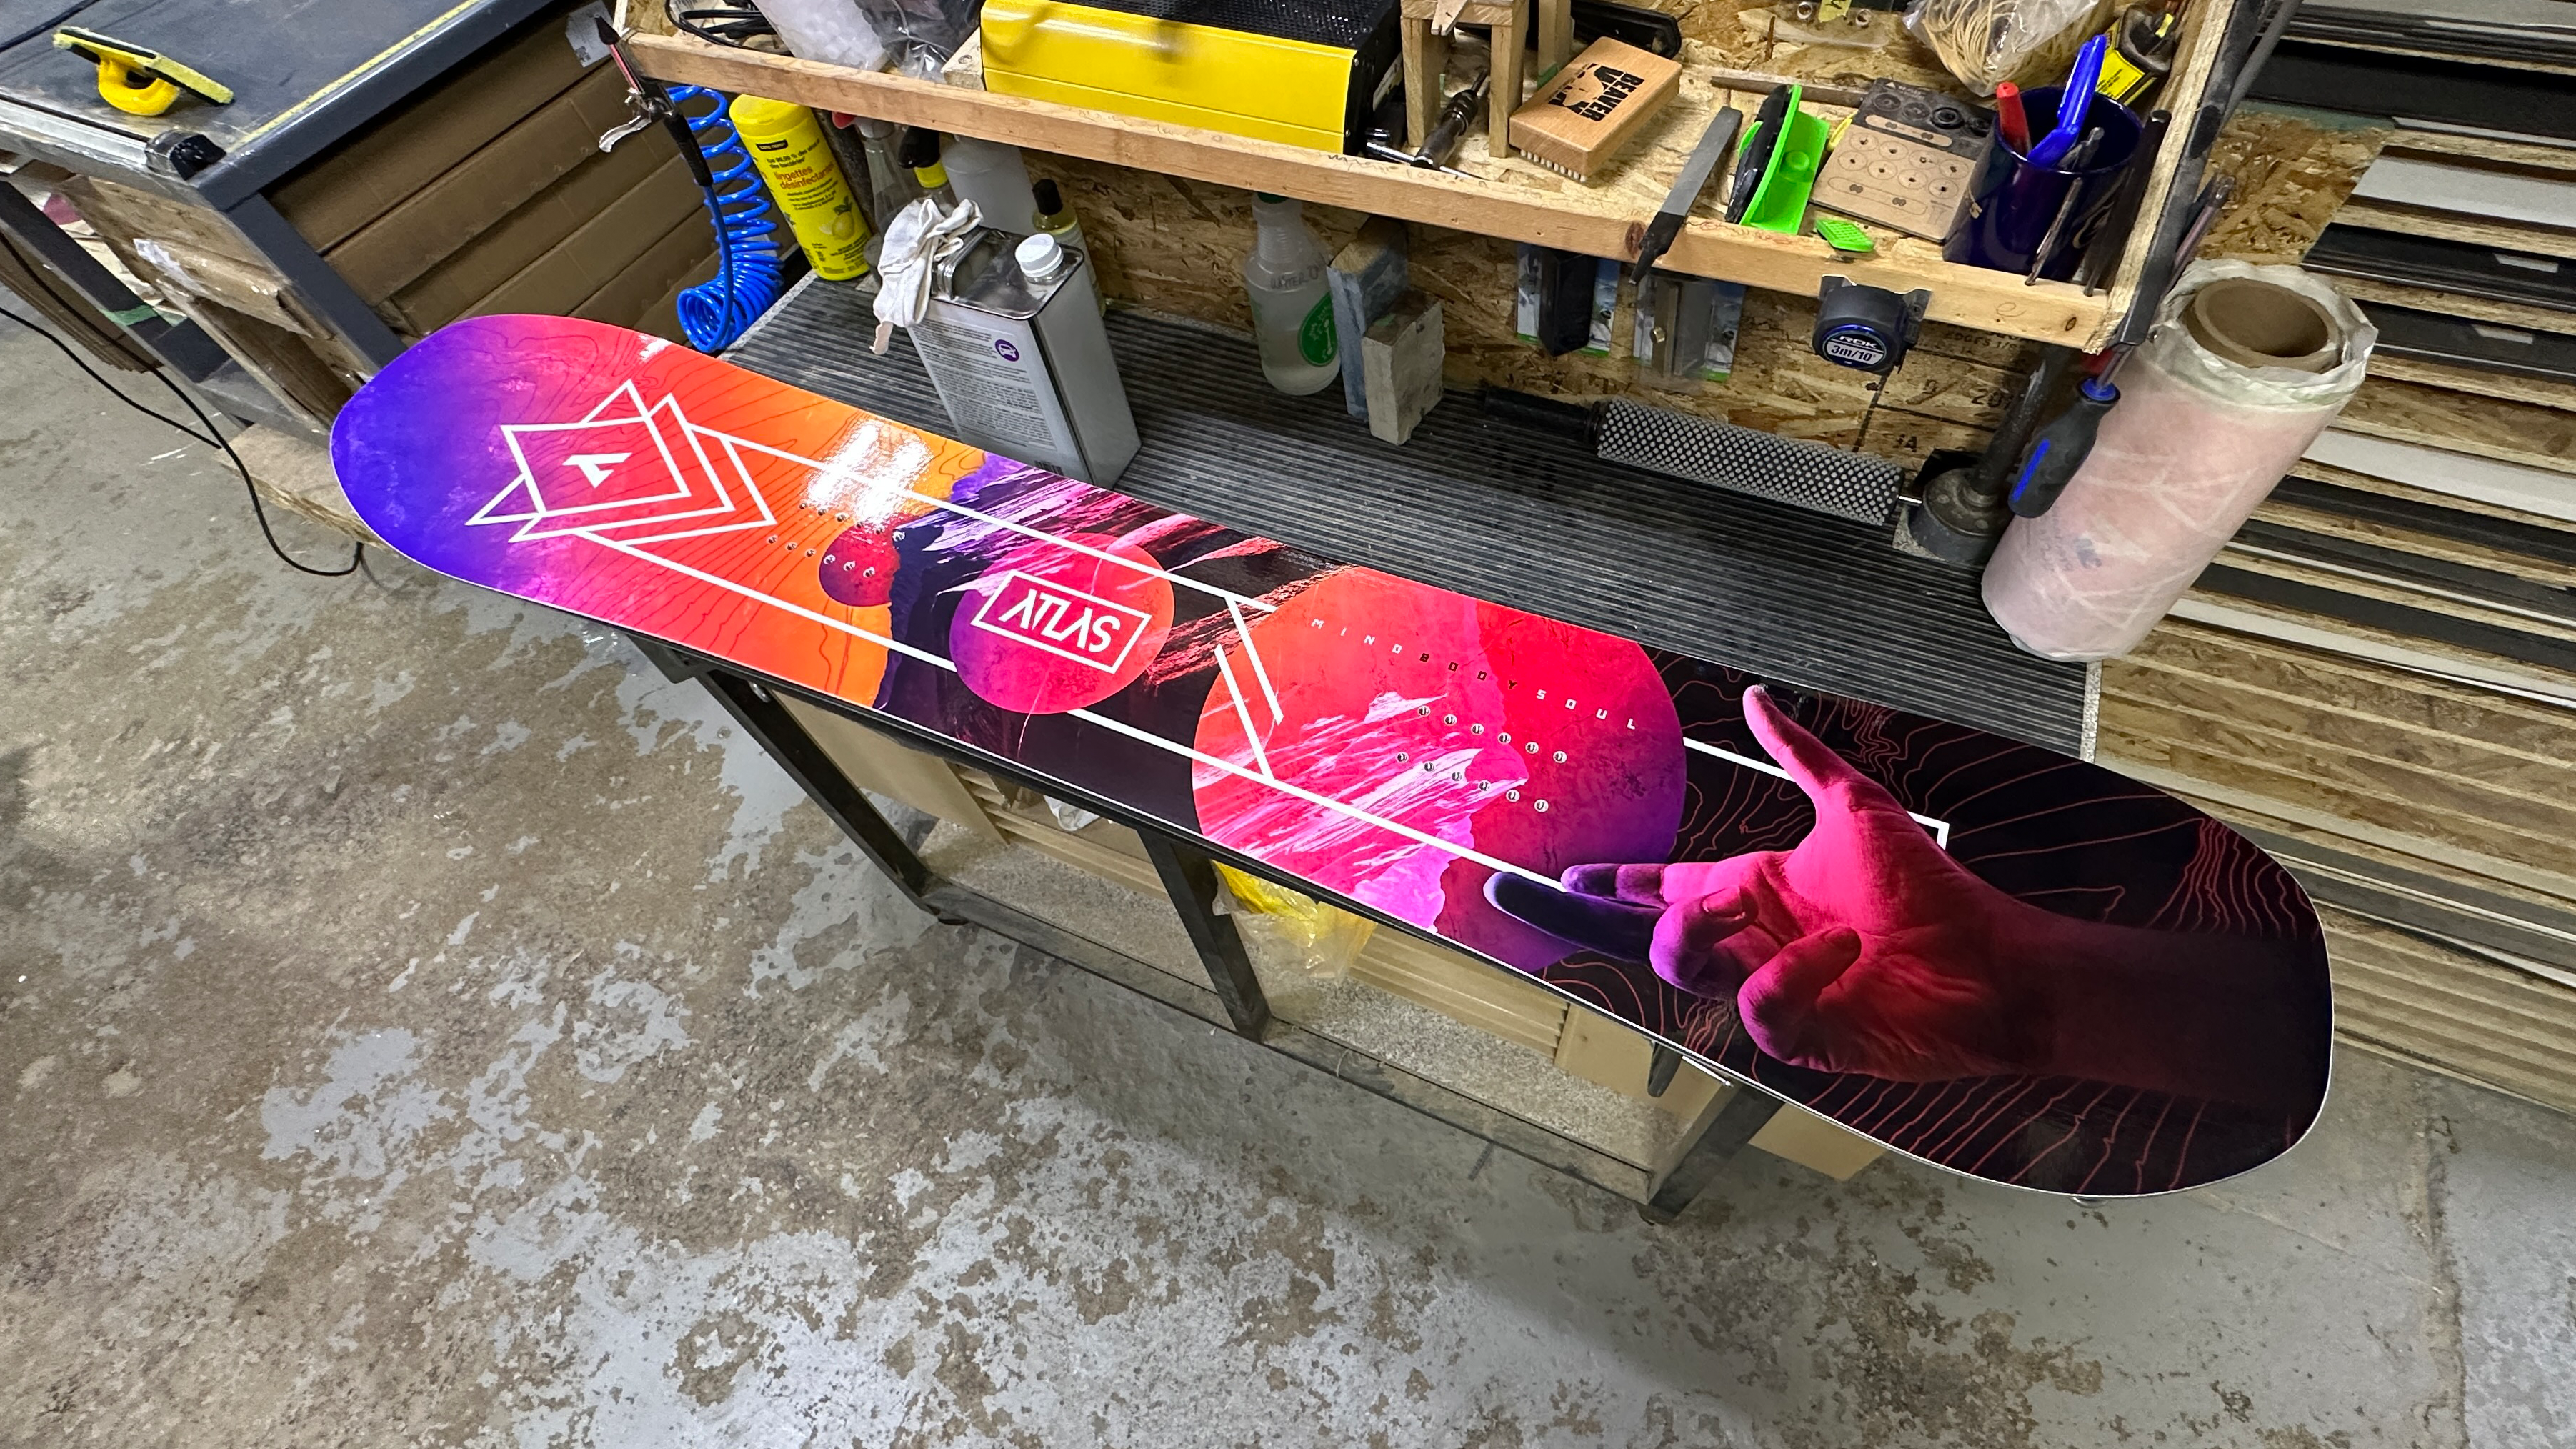 Wired custom snowboard design by a customer